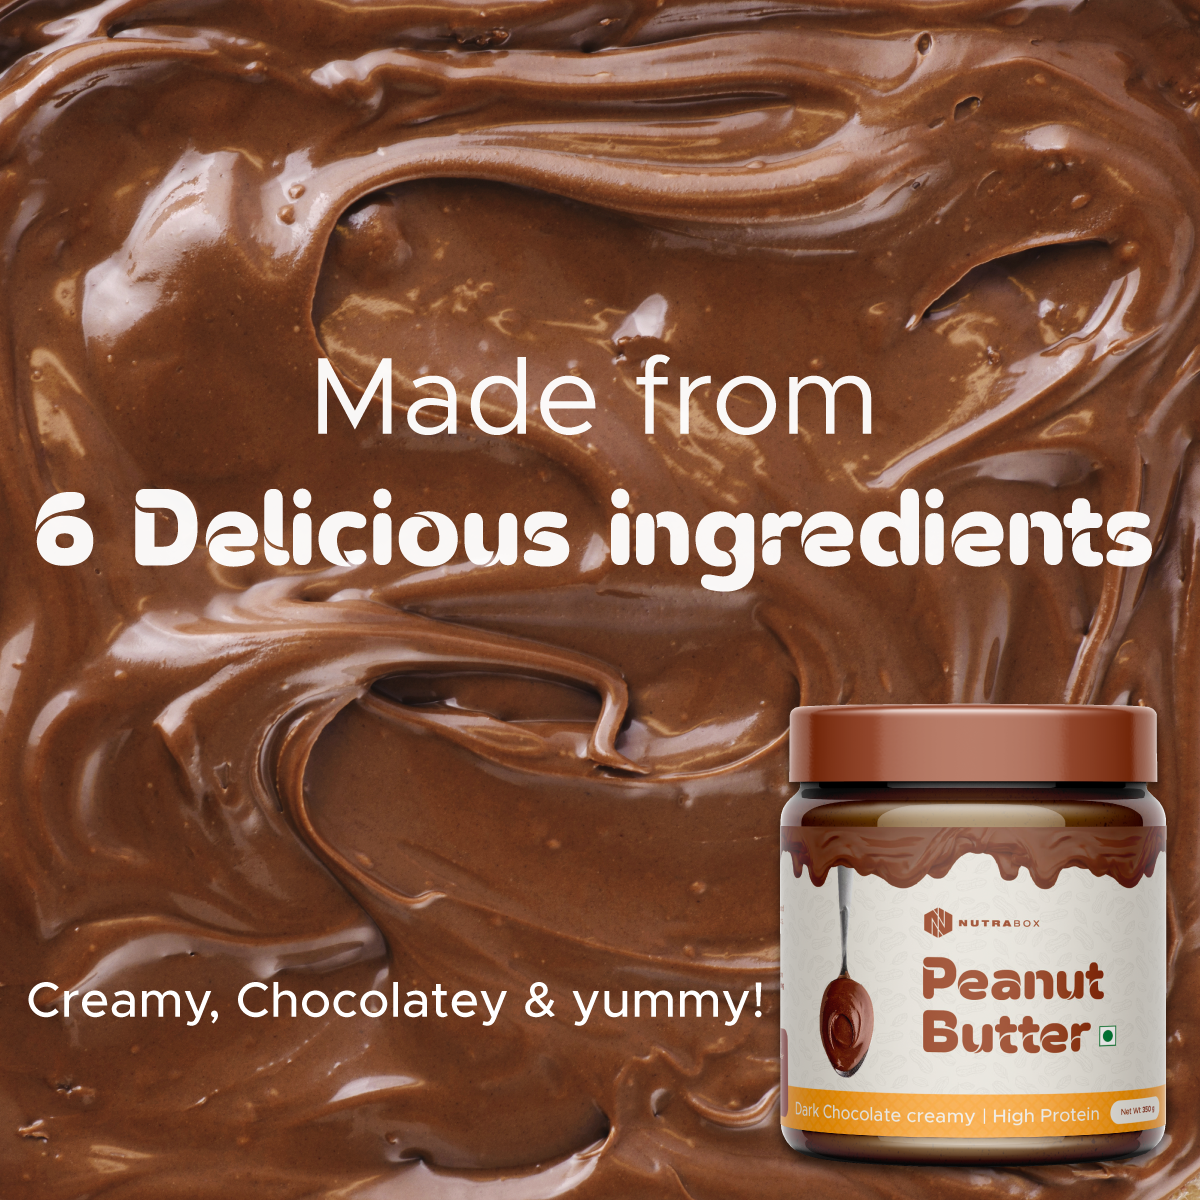 Peanut Butter - Dark Chocolate creamy - Buy 1 Get 1 Free - Nutrabox India